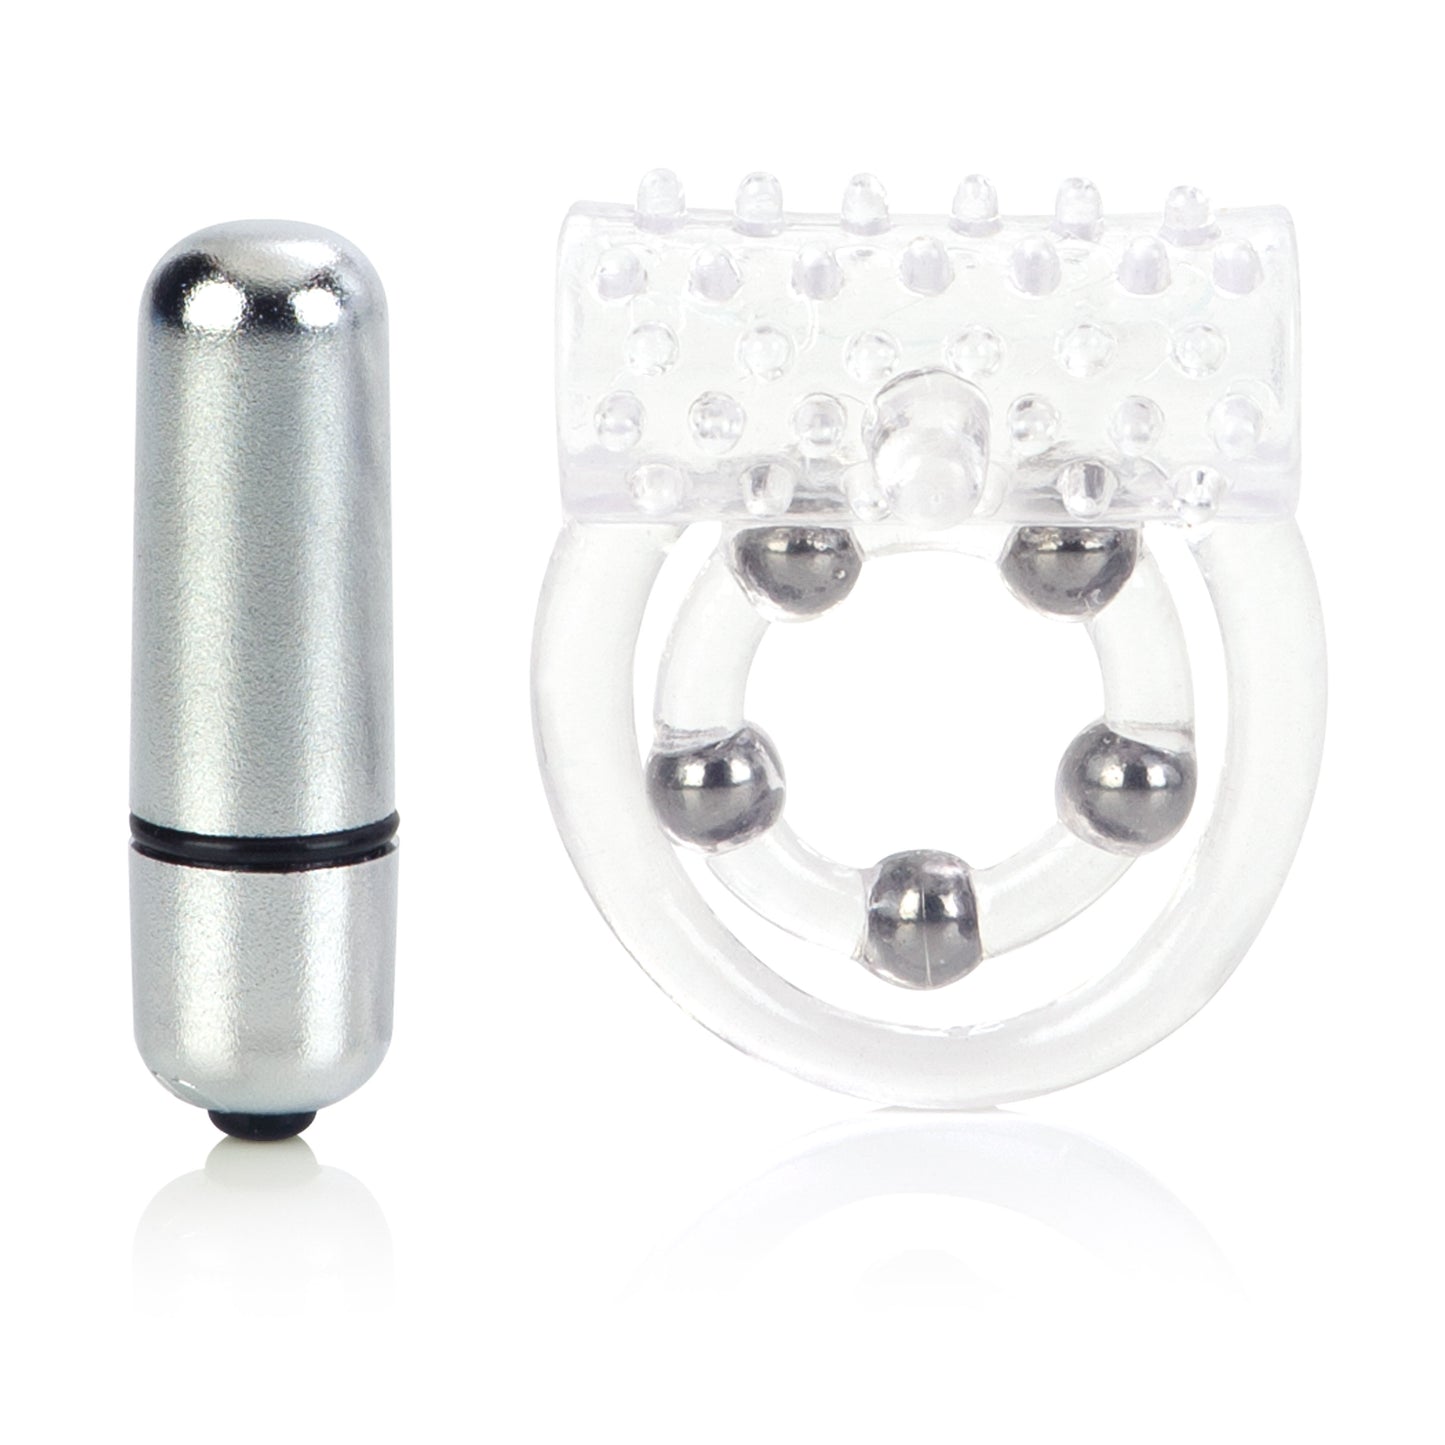 Maximus Enhancement Ring 5 Stroker Beads - Clear SE1456103